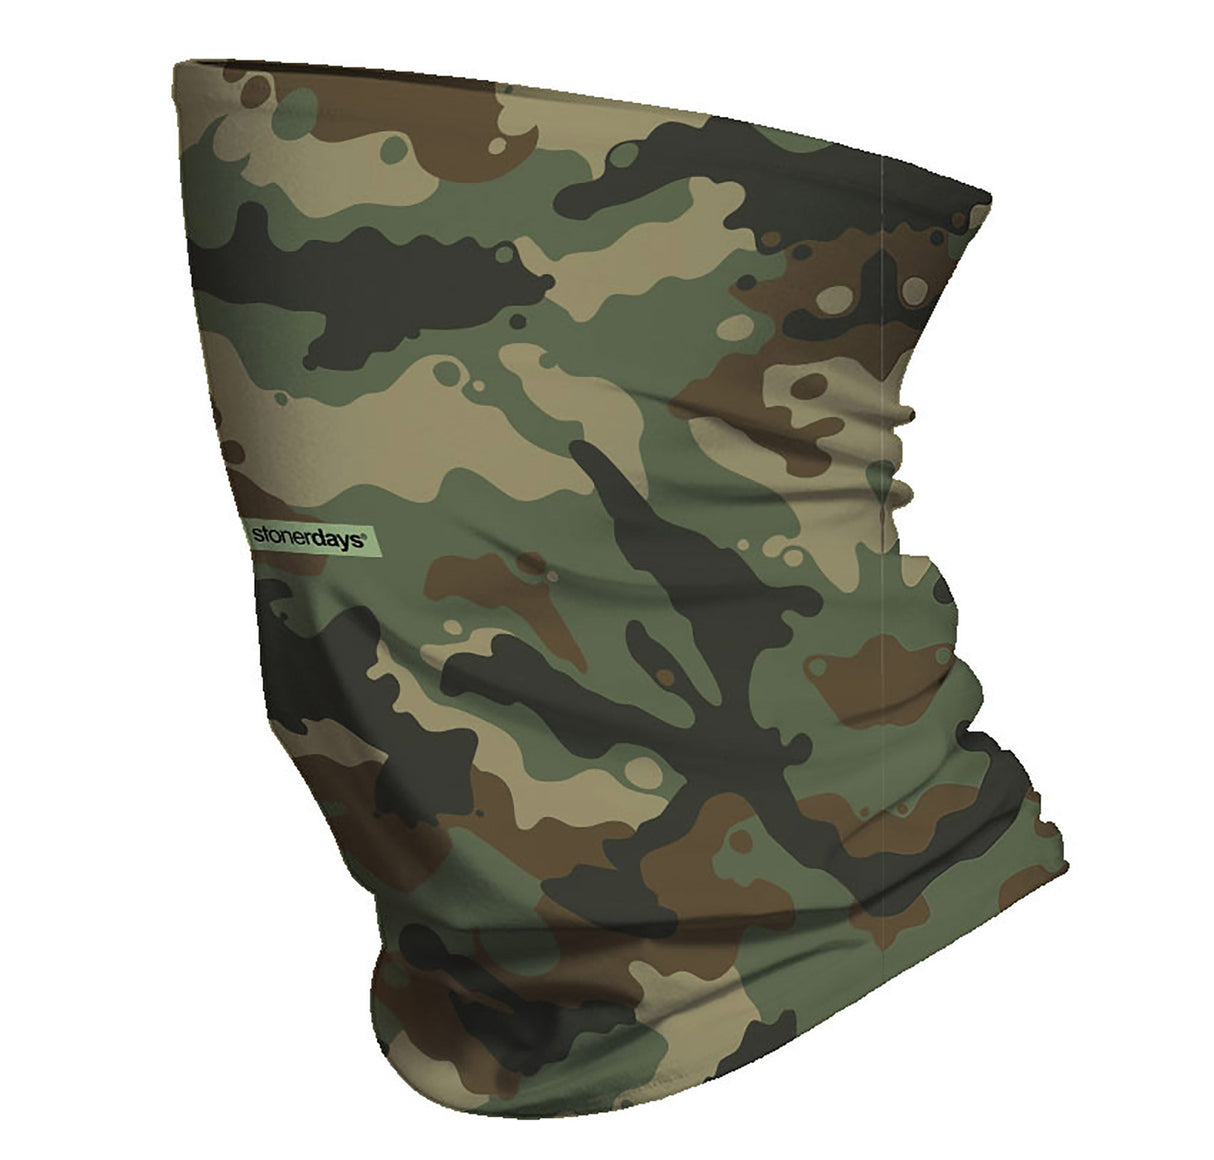 StonerDays All American Neck Gaiter in Camouflage - Versatile Polyester Apparel